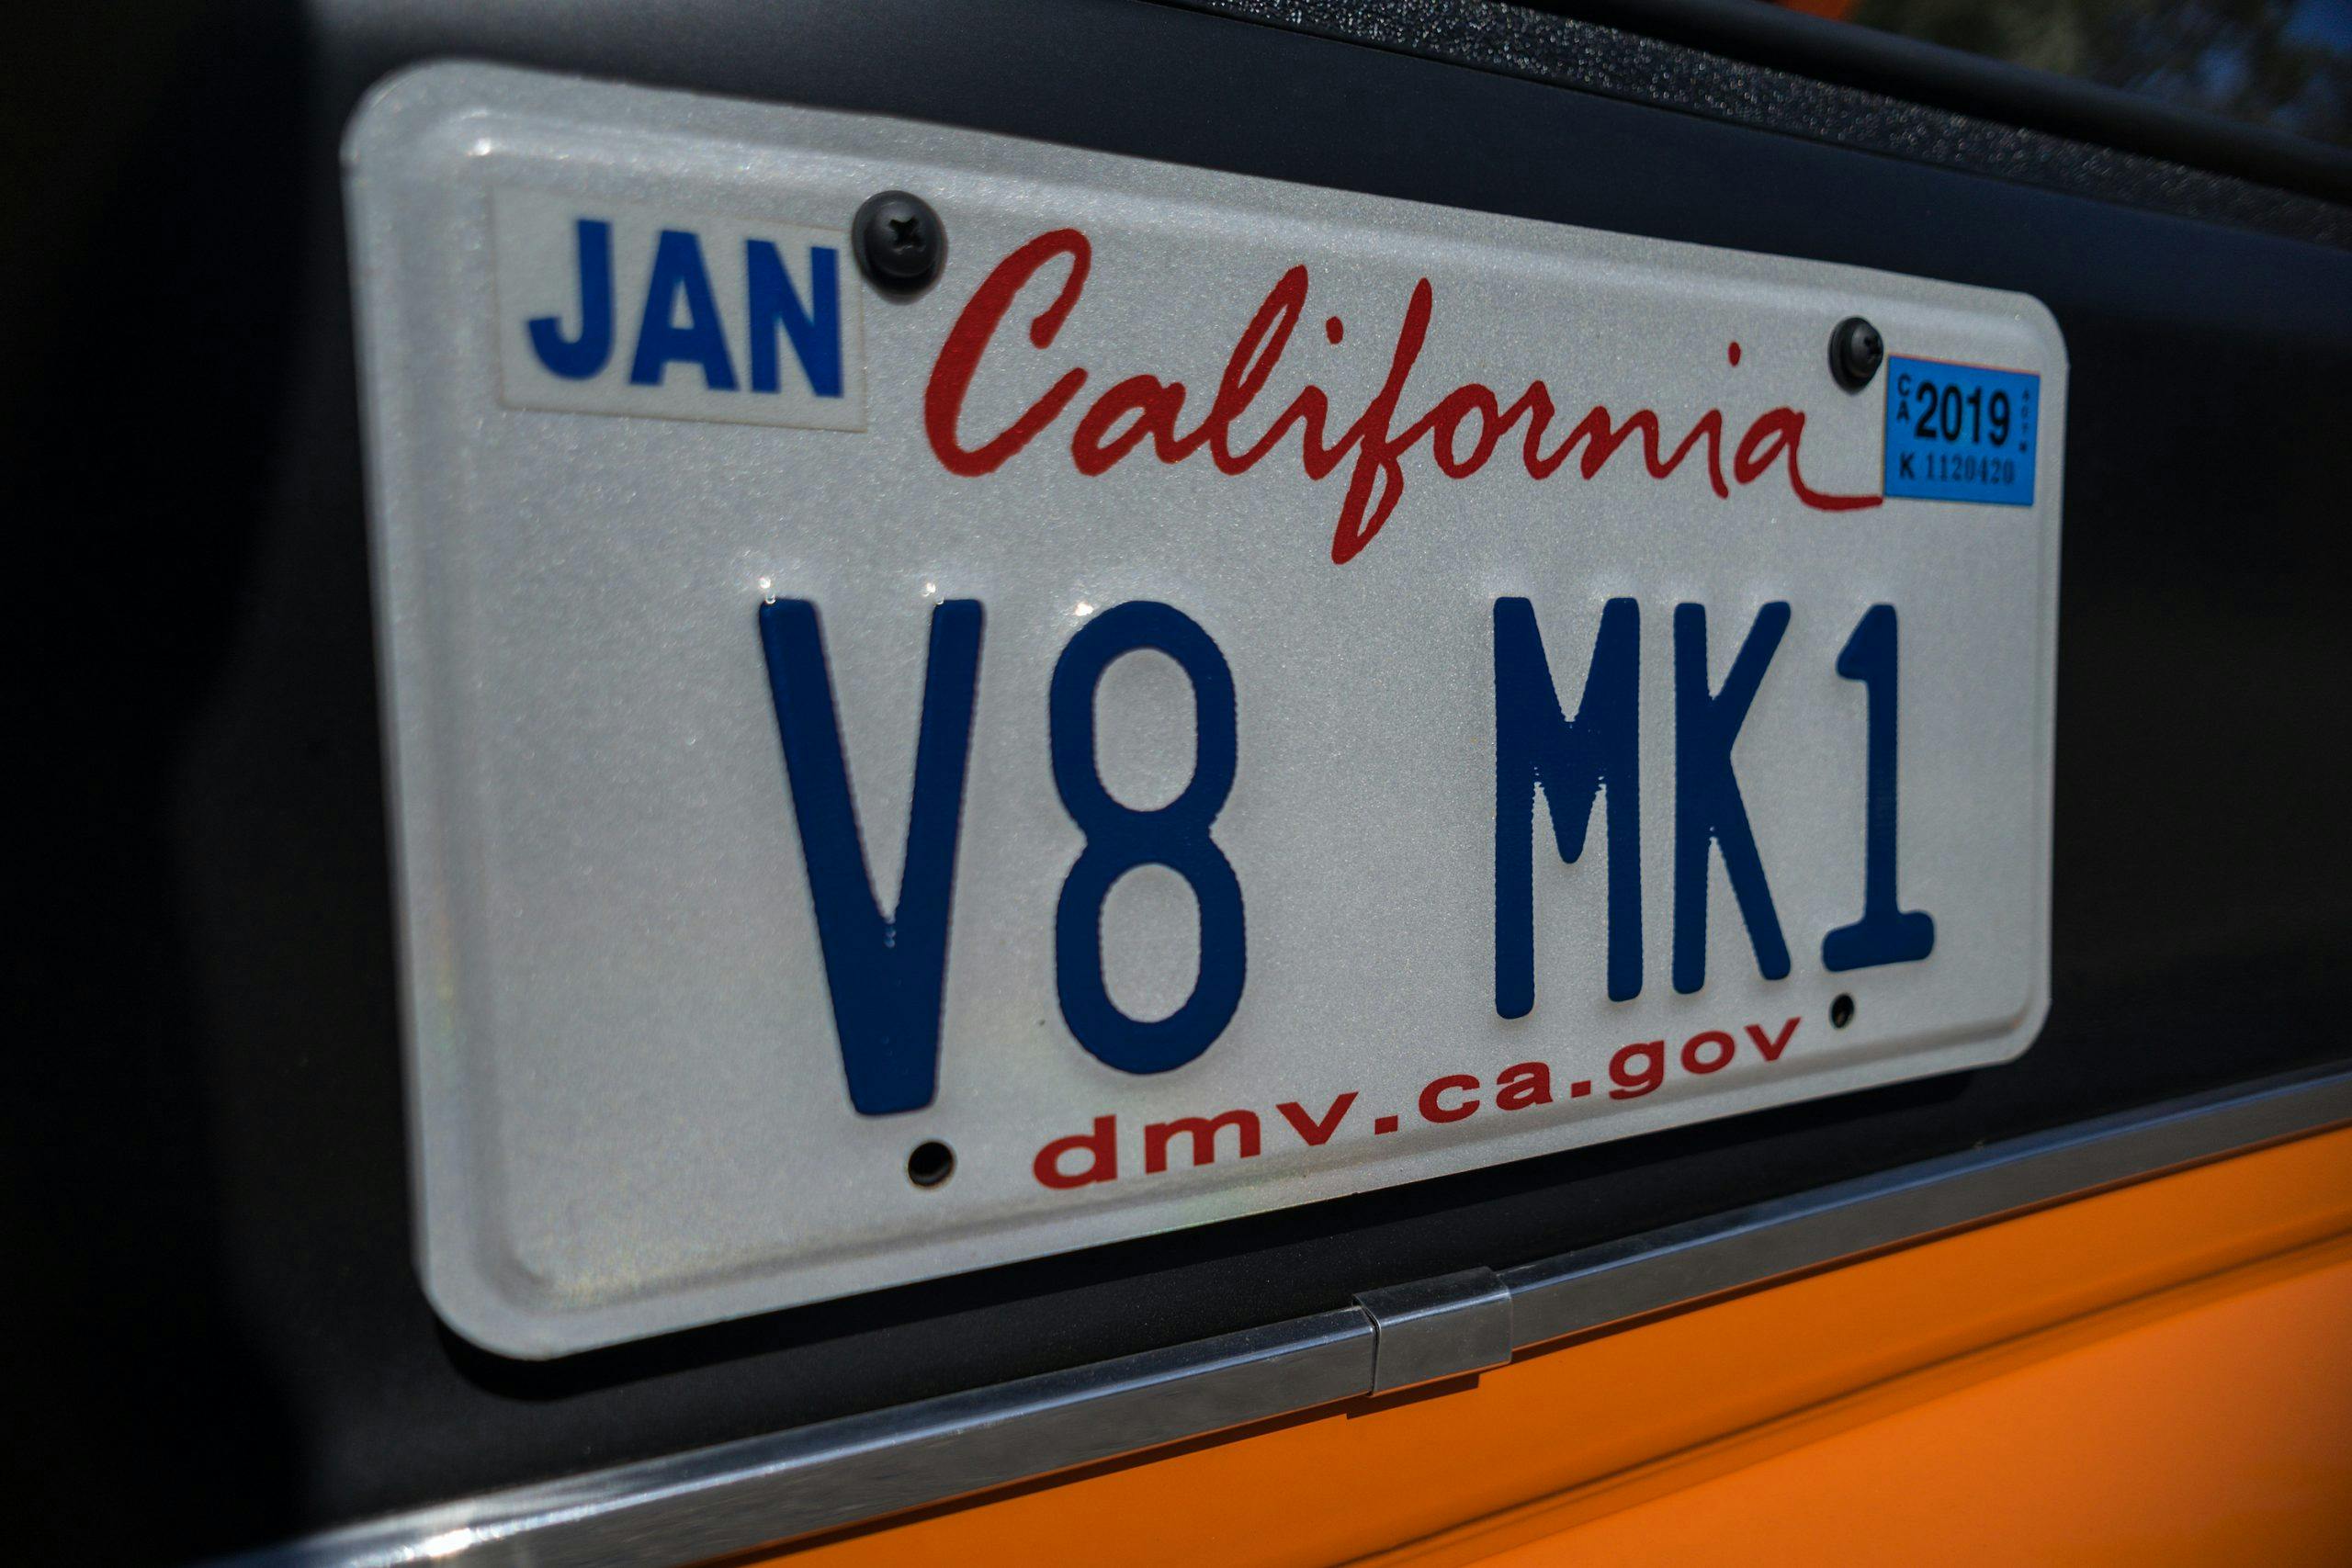 1974 Mk I Ford Capri restomod california vanity plate